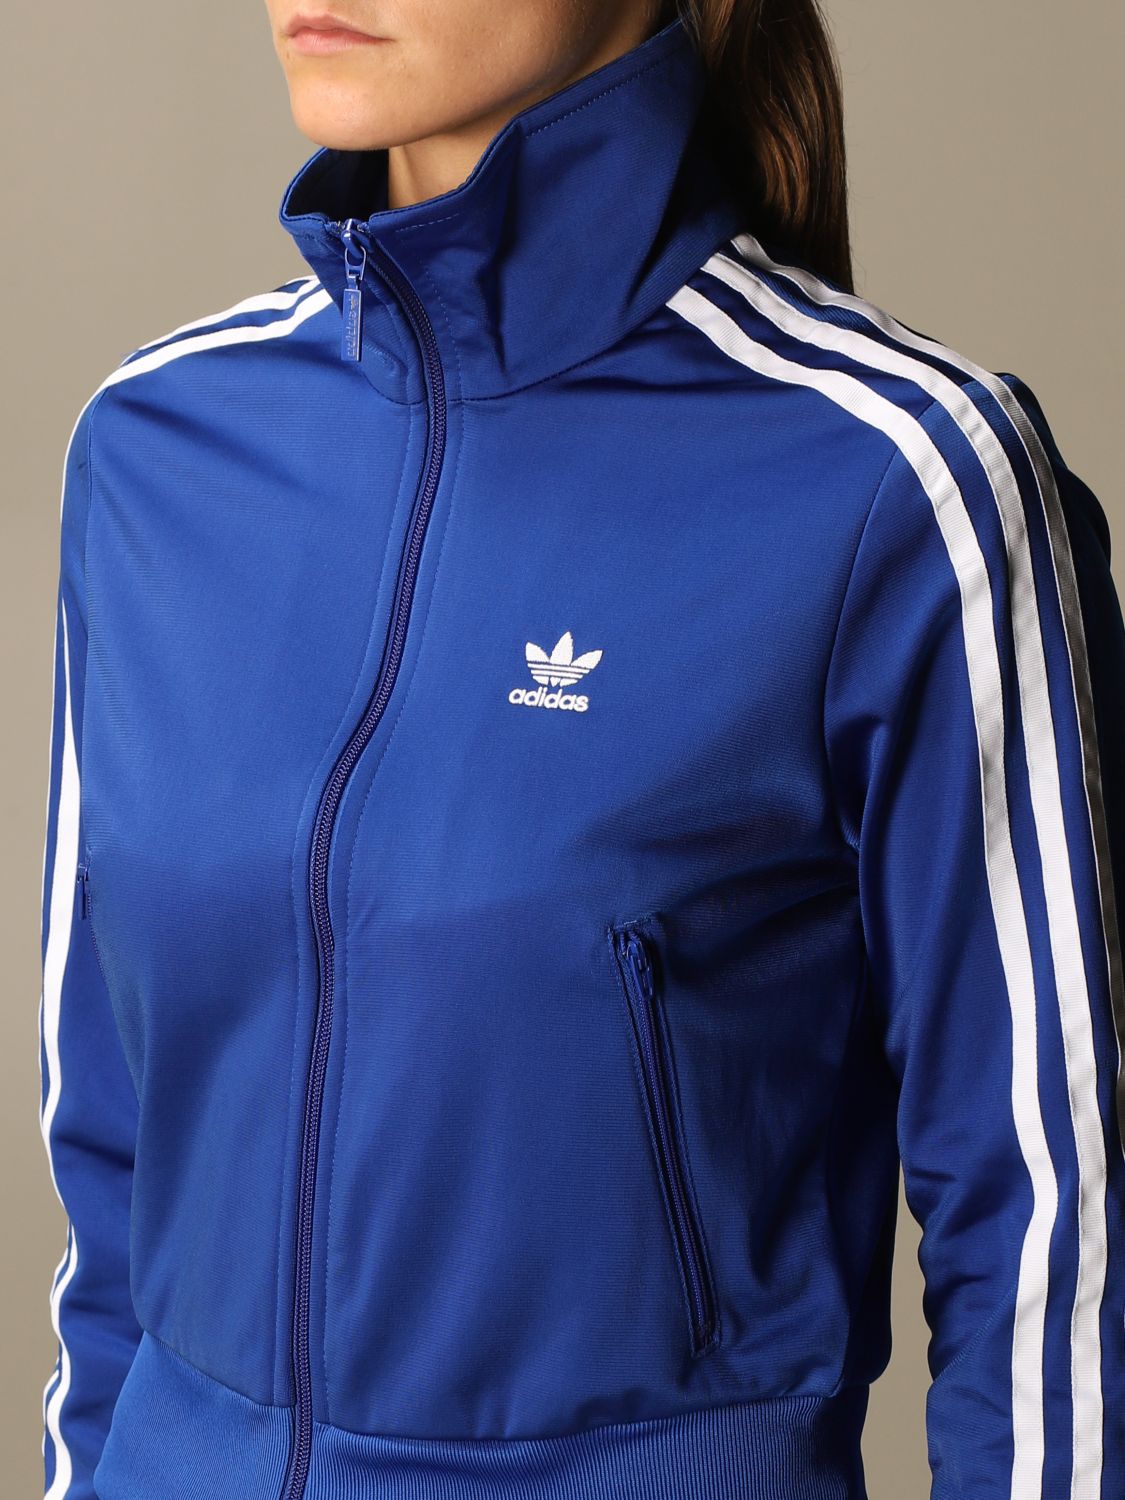 ADIDAS ORIGINALS: zip sweatshirt with logo - Blue | Adidas Originals  sweatshirt GD2372 online on GIGLIO.COM